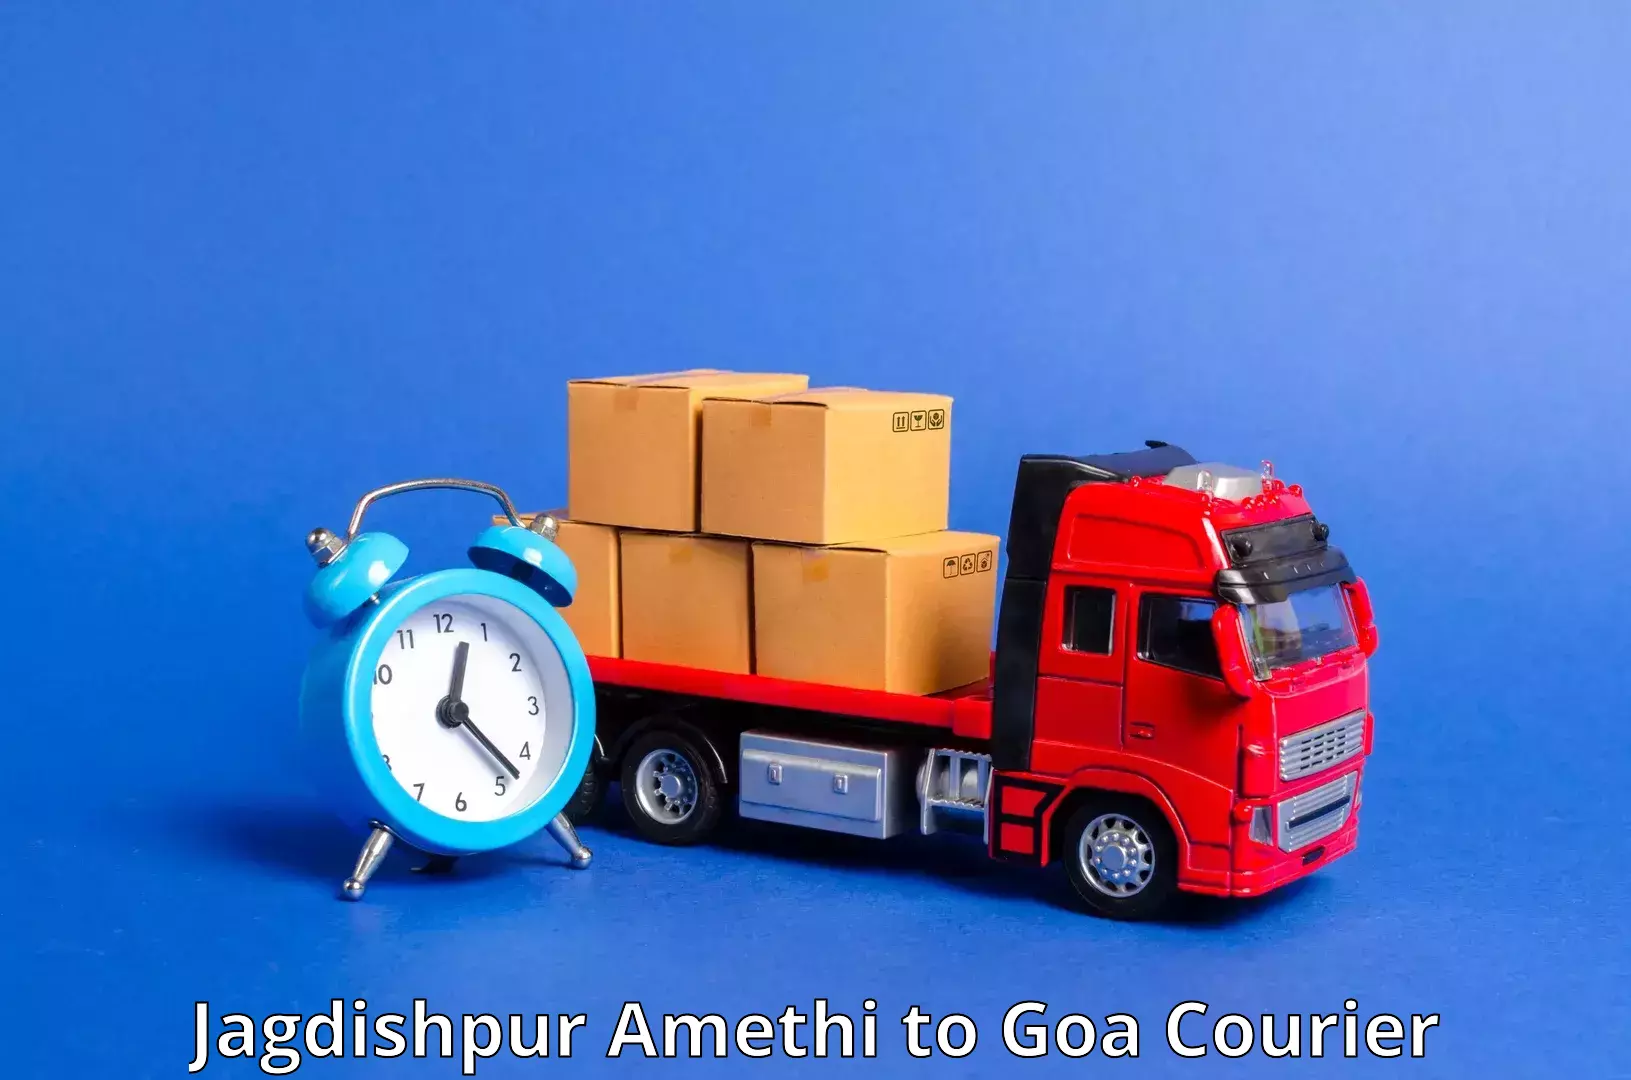 Global courier networks Jagdishpur Amethi to Panaji